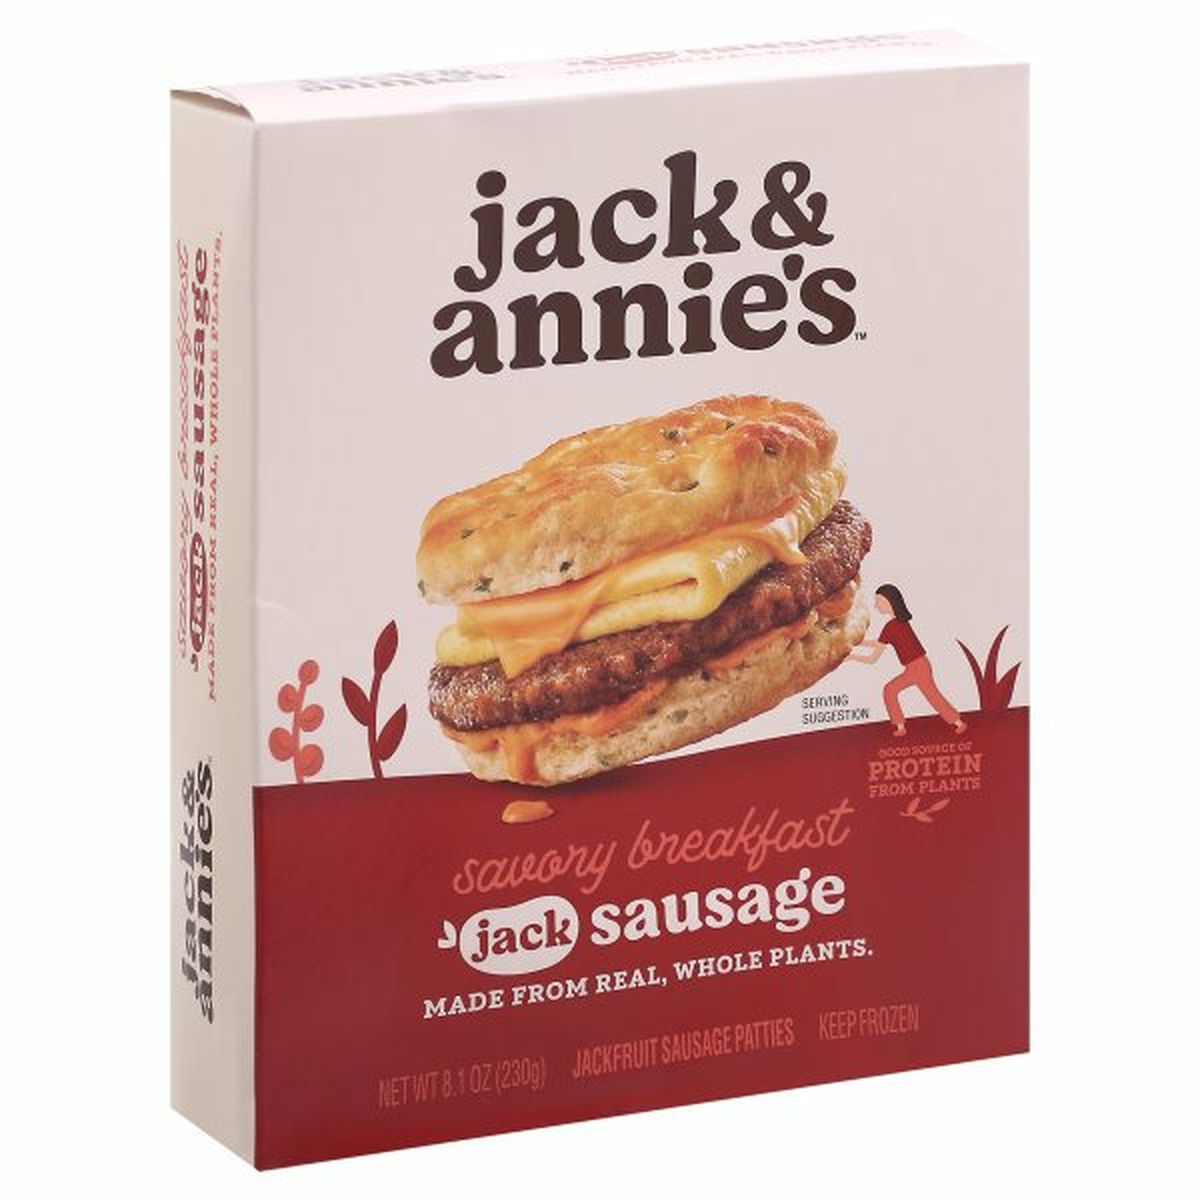 Calories in Jack & Annie's Jackfruit Sausage Patties, Savory Breakfast